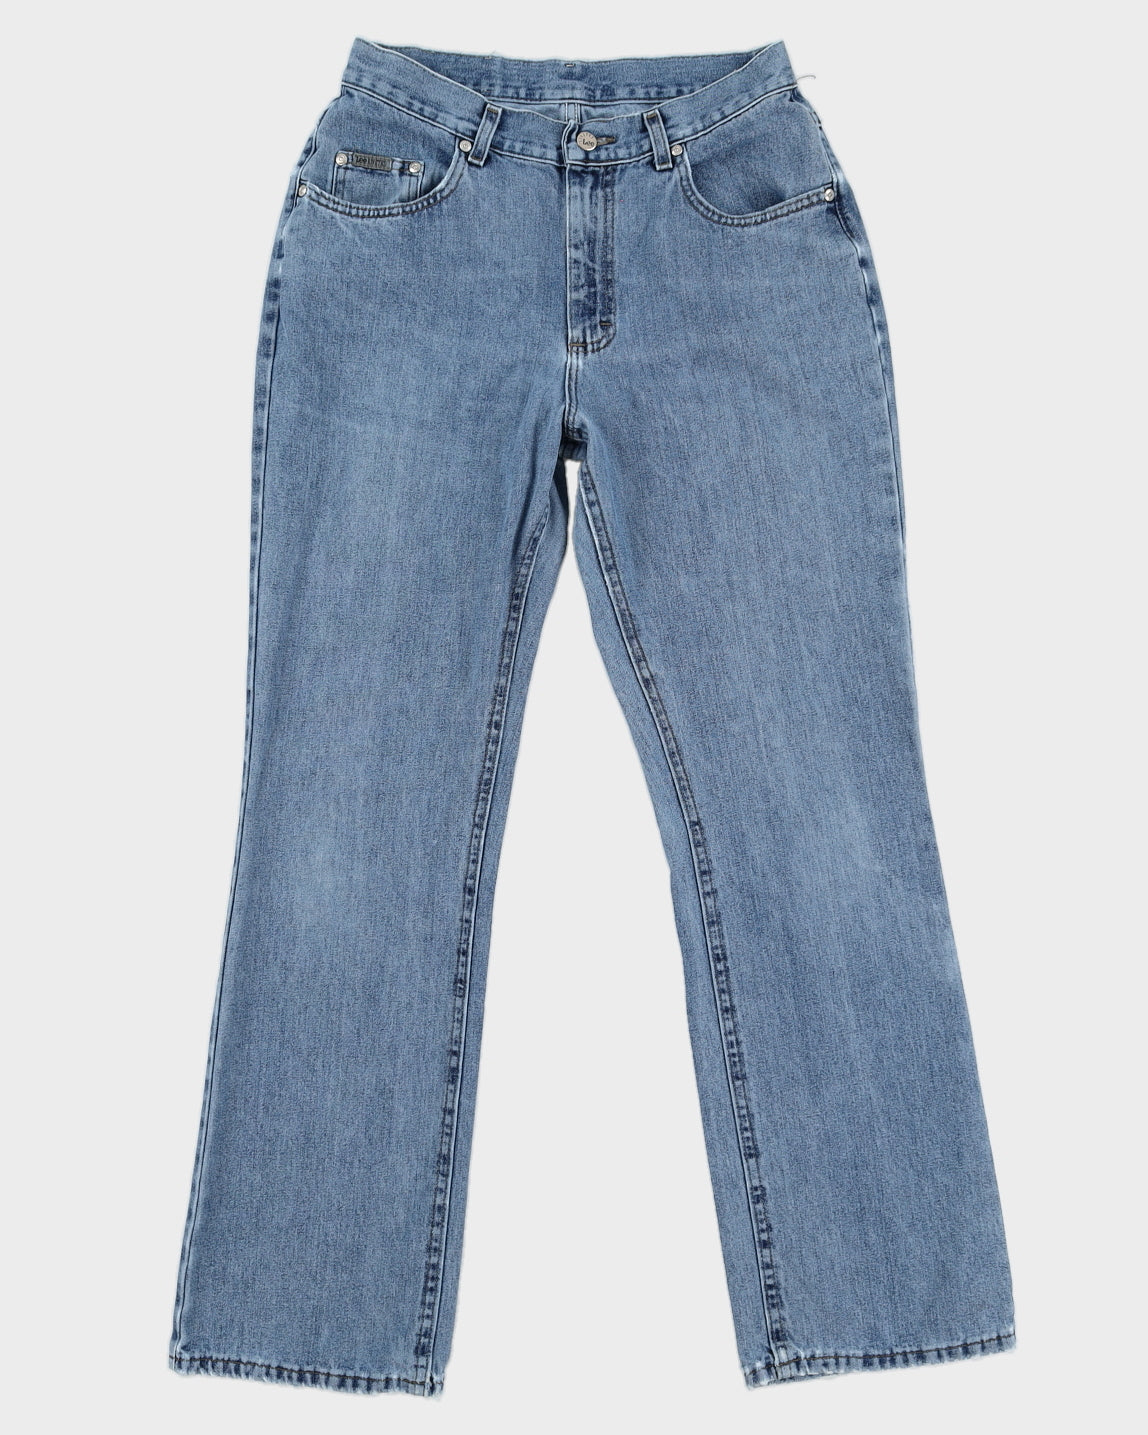 Vintage 90s Riveted By Lee Blue Denim Jeans - W31